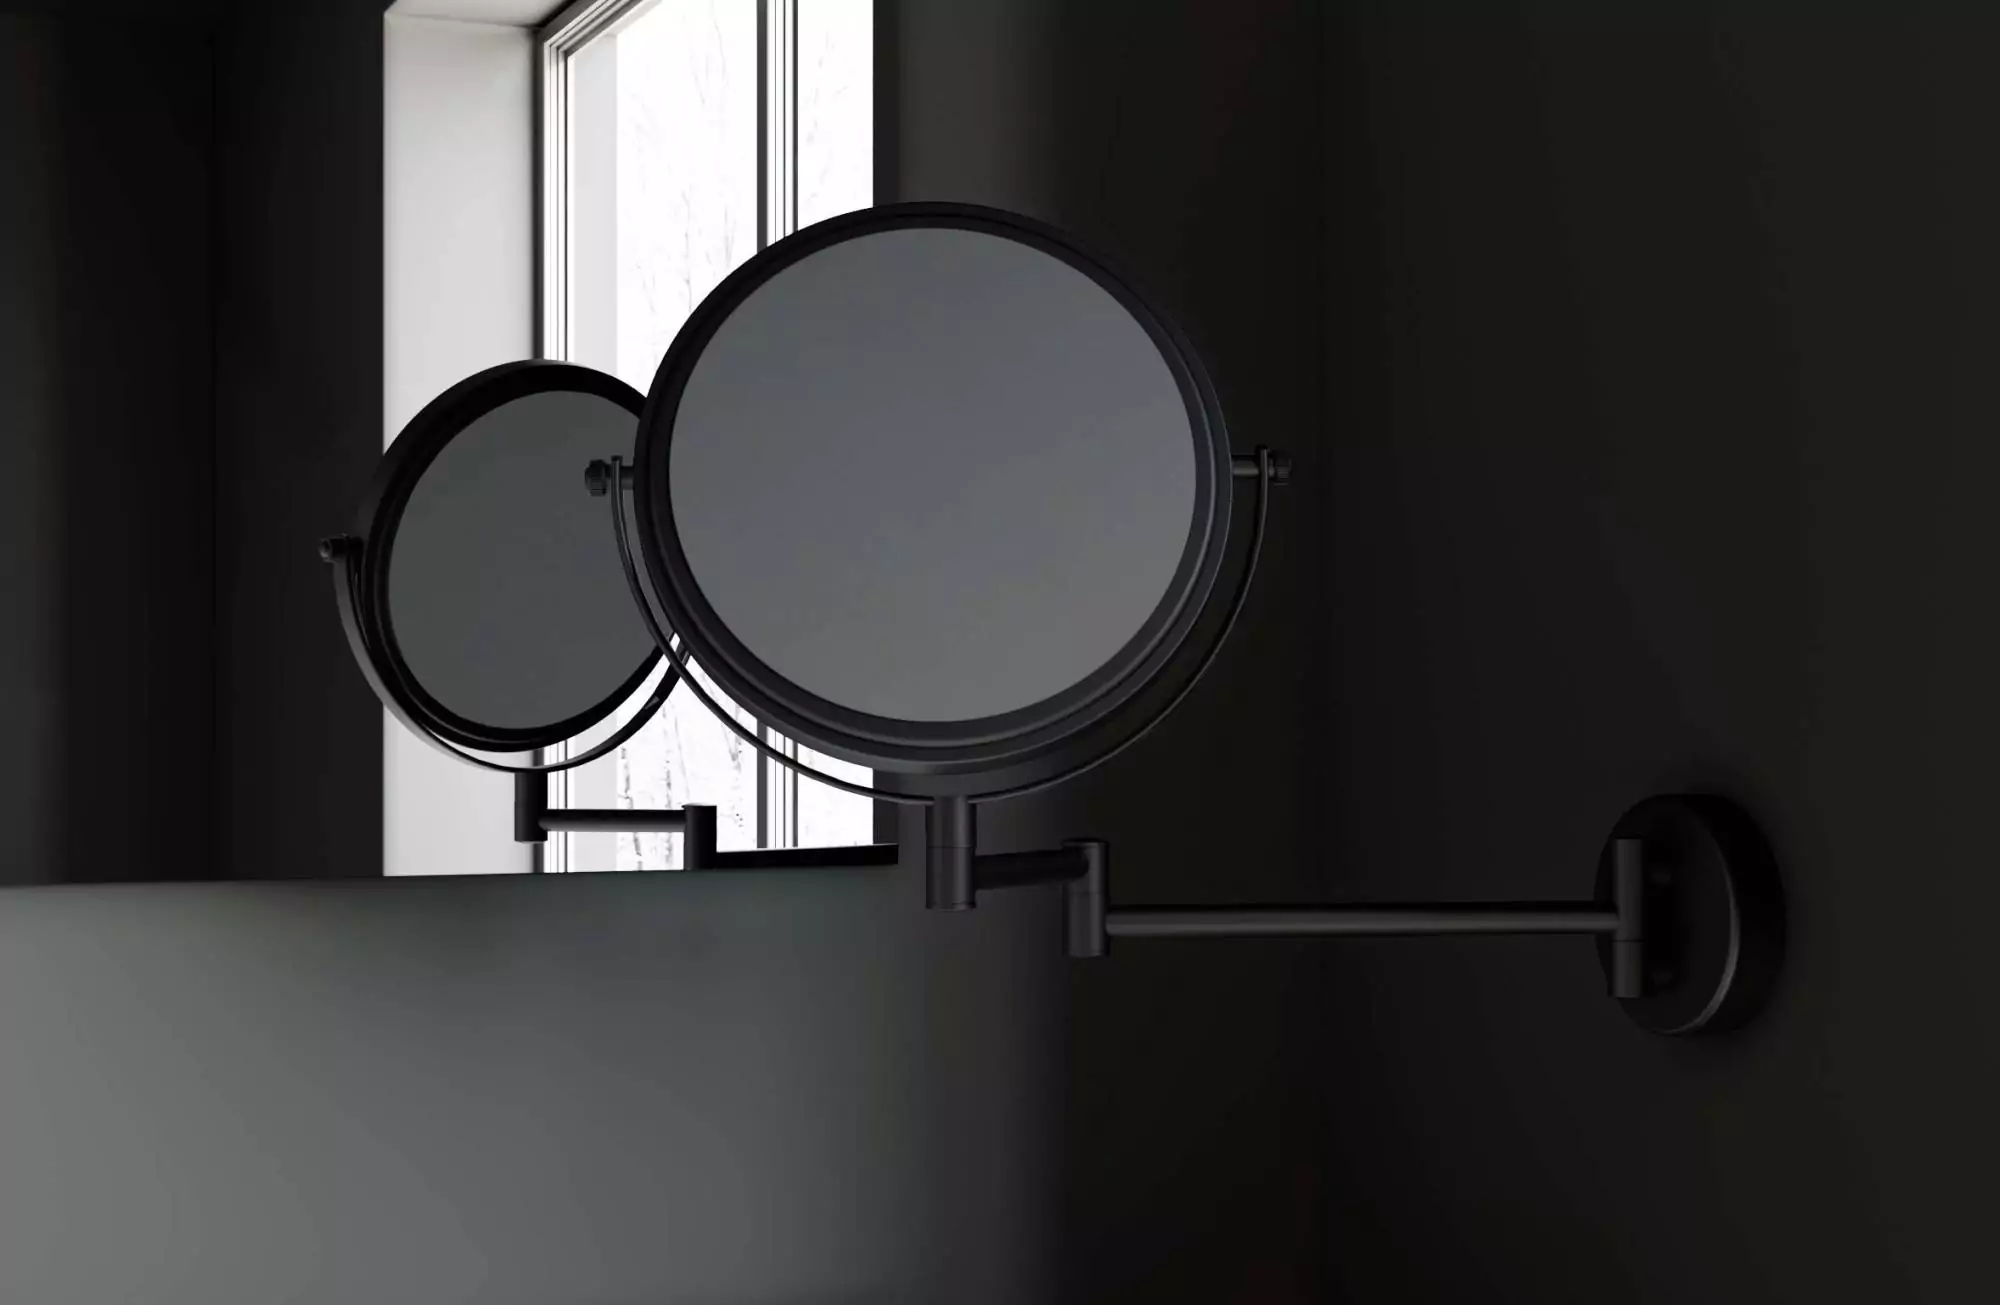 Espejo de aumento con luz regulable en negro mate